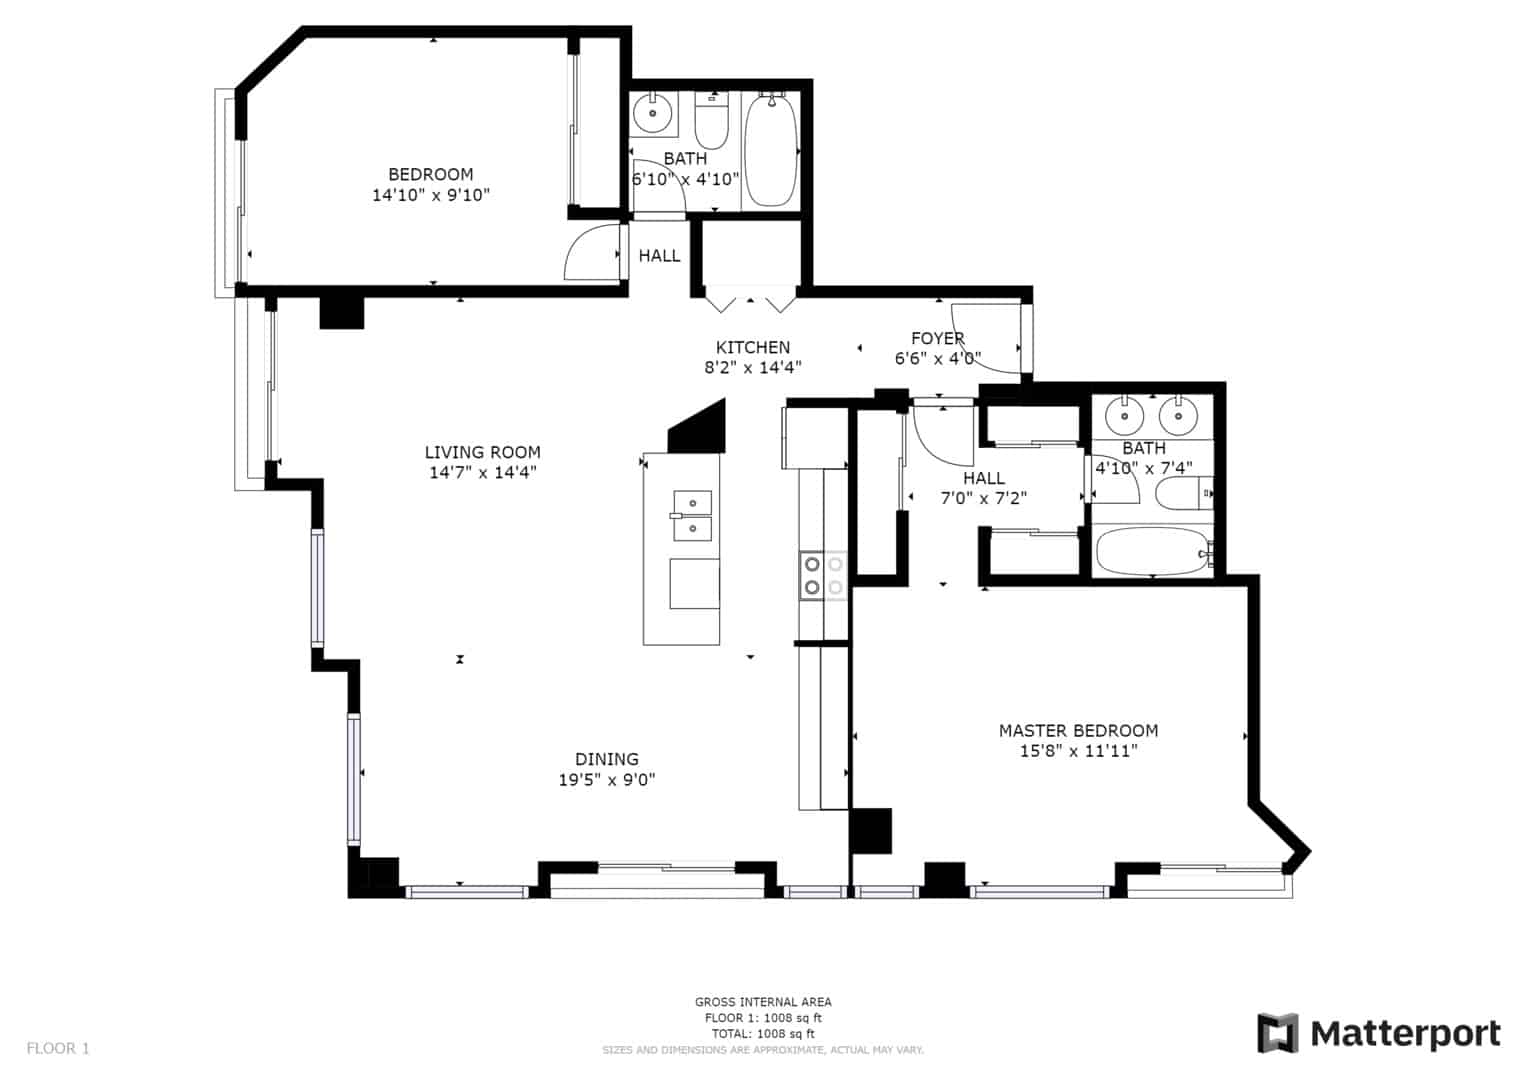 Floor Plan for 345 W Fullerton, #1908, Chicago, IL 60614